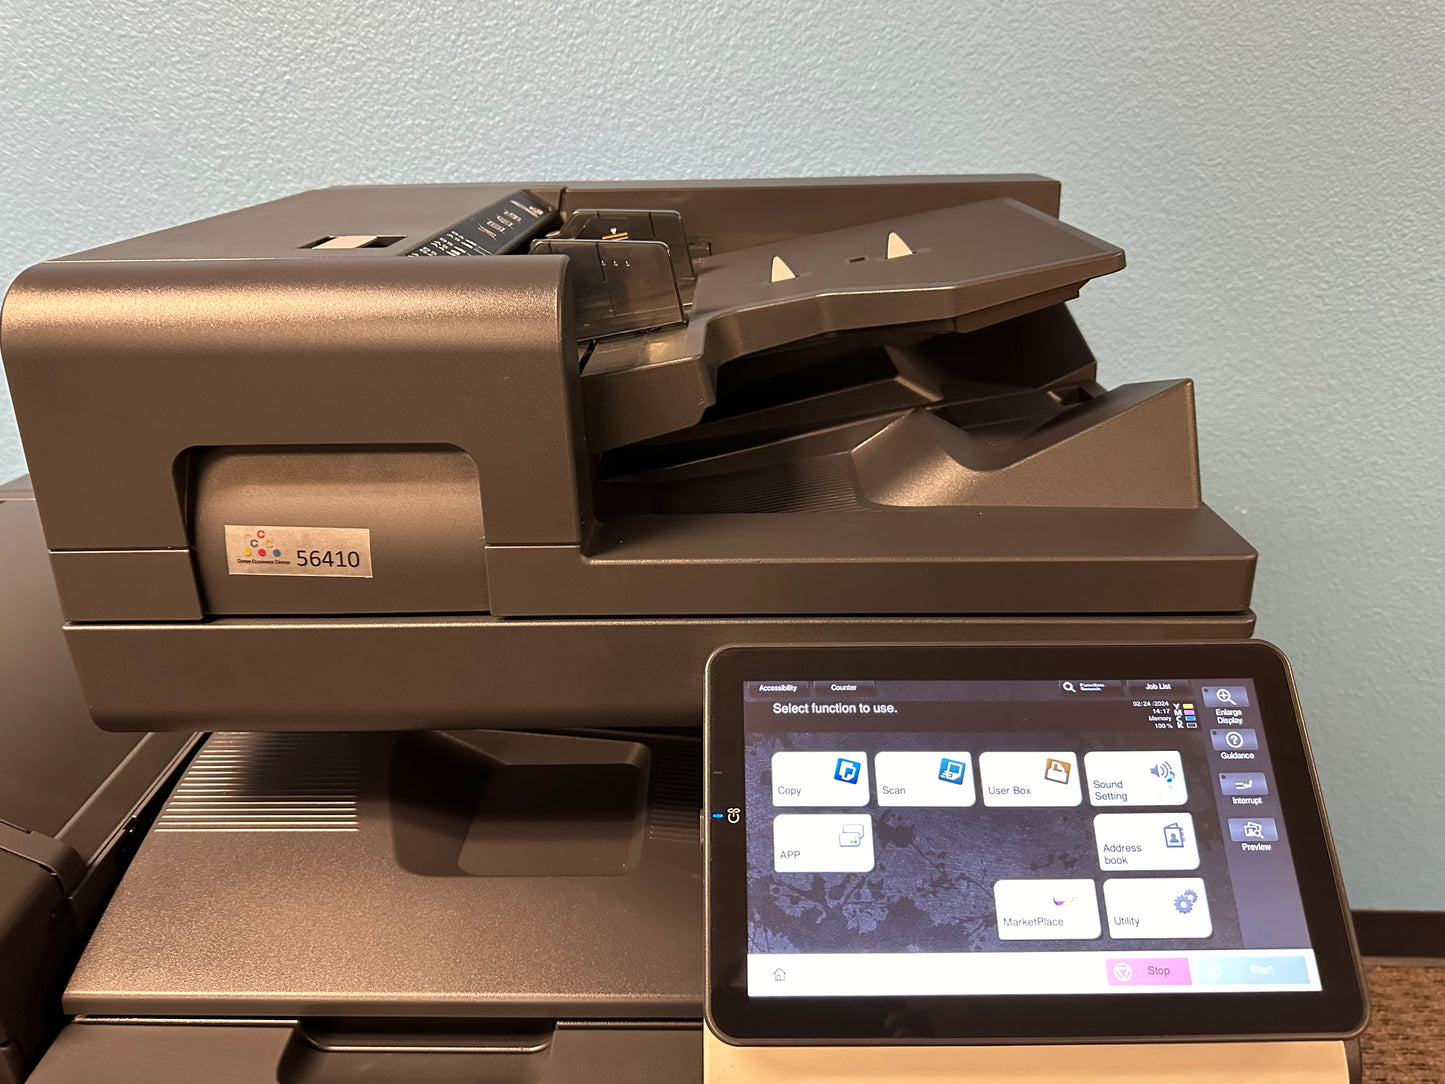 WOW Demo Unit Konica Minolta Bizhub C750i Color Copier Printer Scan Low 3k Usage